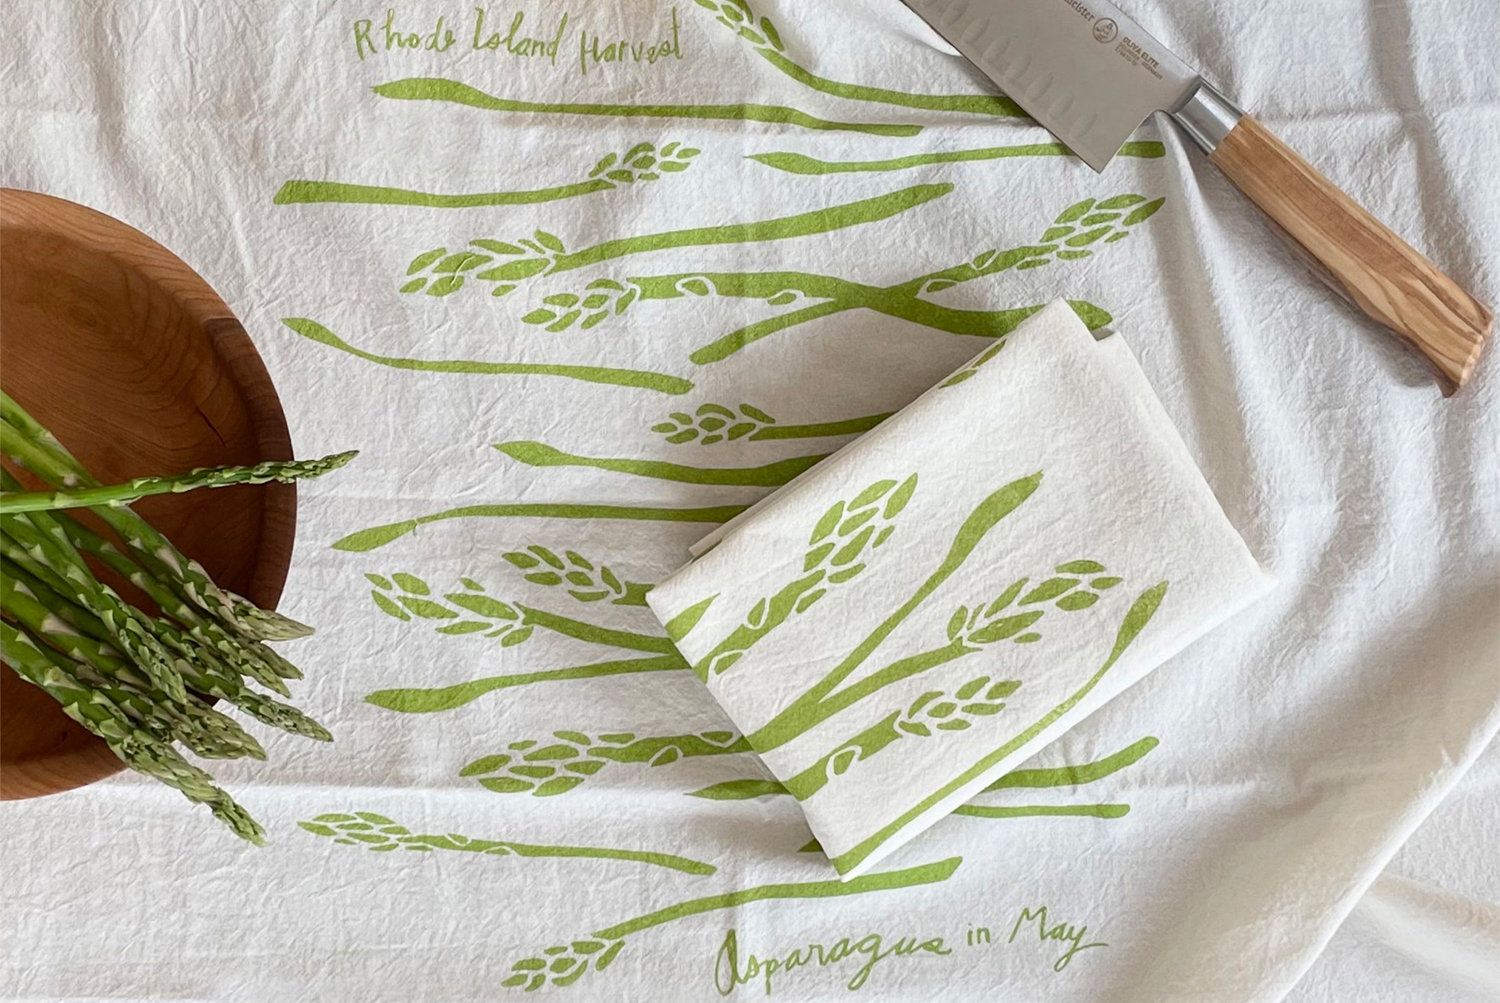 Asparagus in May Rhode Island Harvest Tea Towel